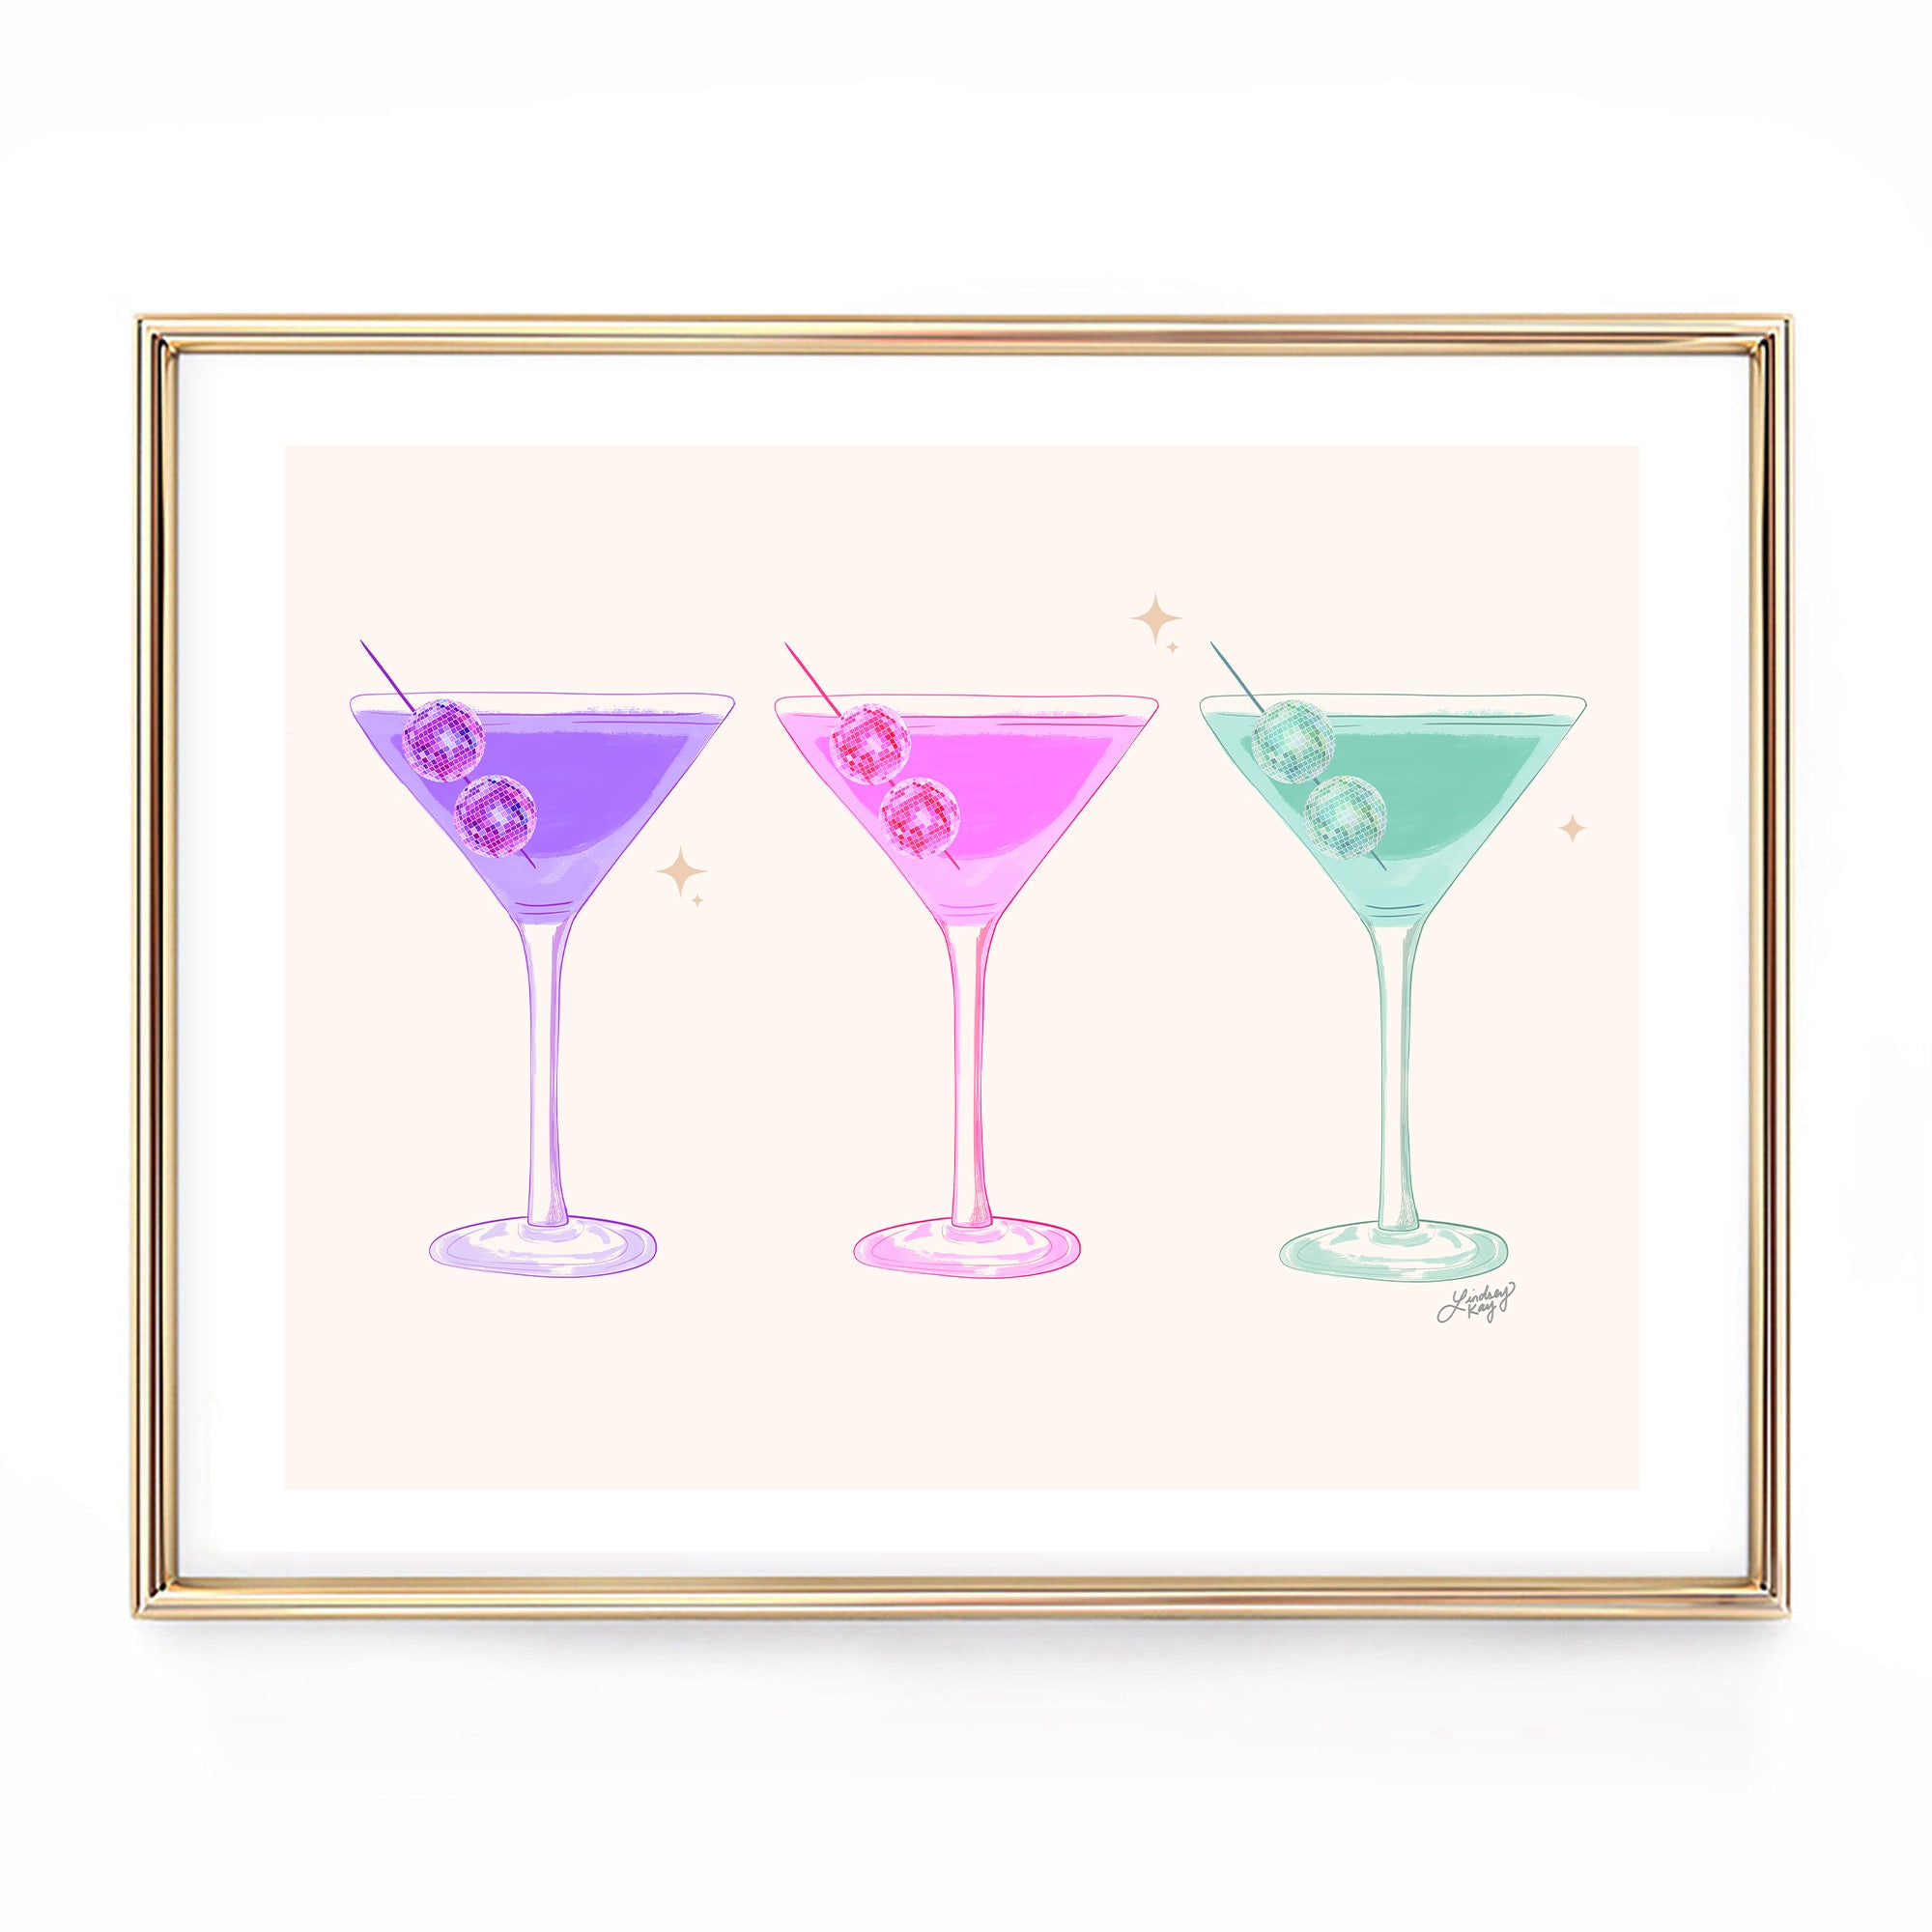 disco ball martini glasses illustration painting wall art print poster lindsey kay collective bar cart decor